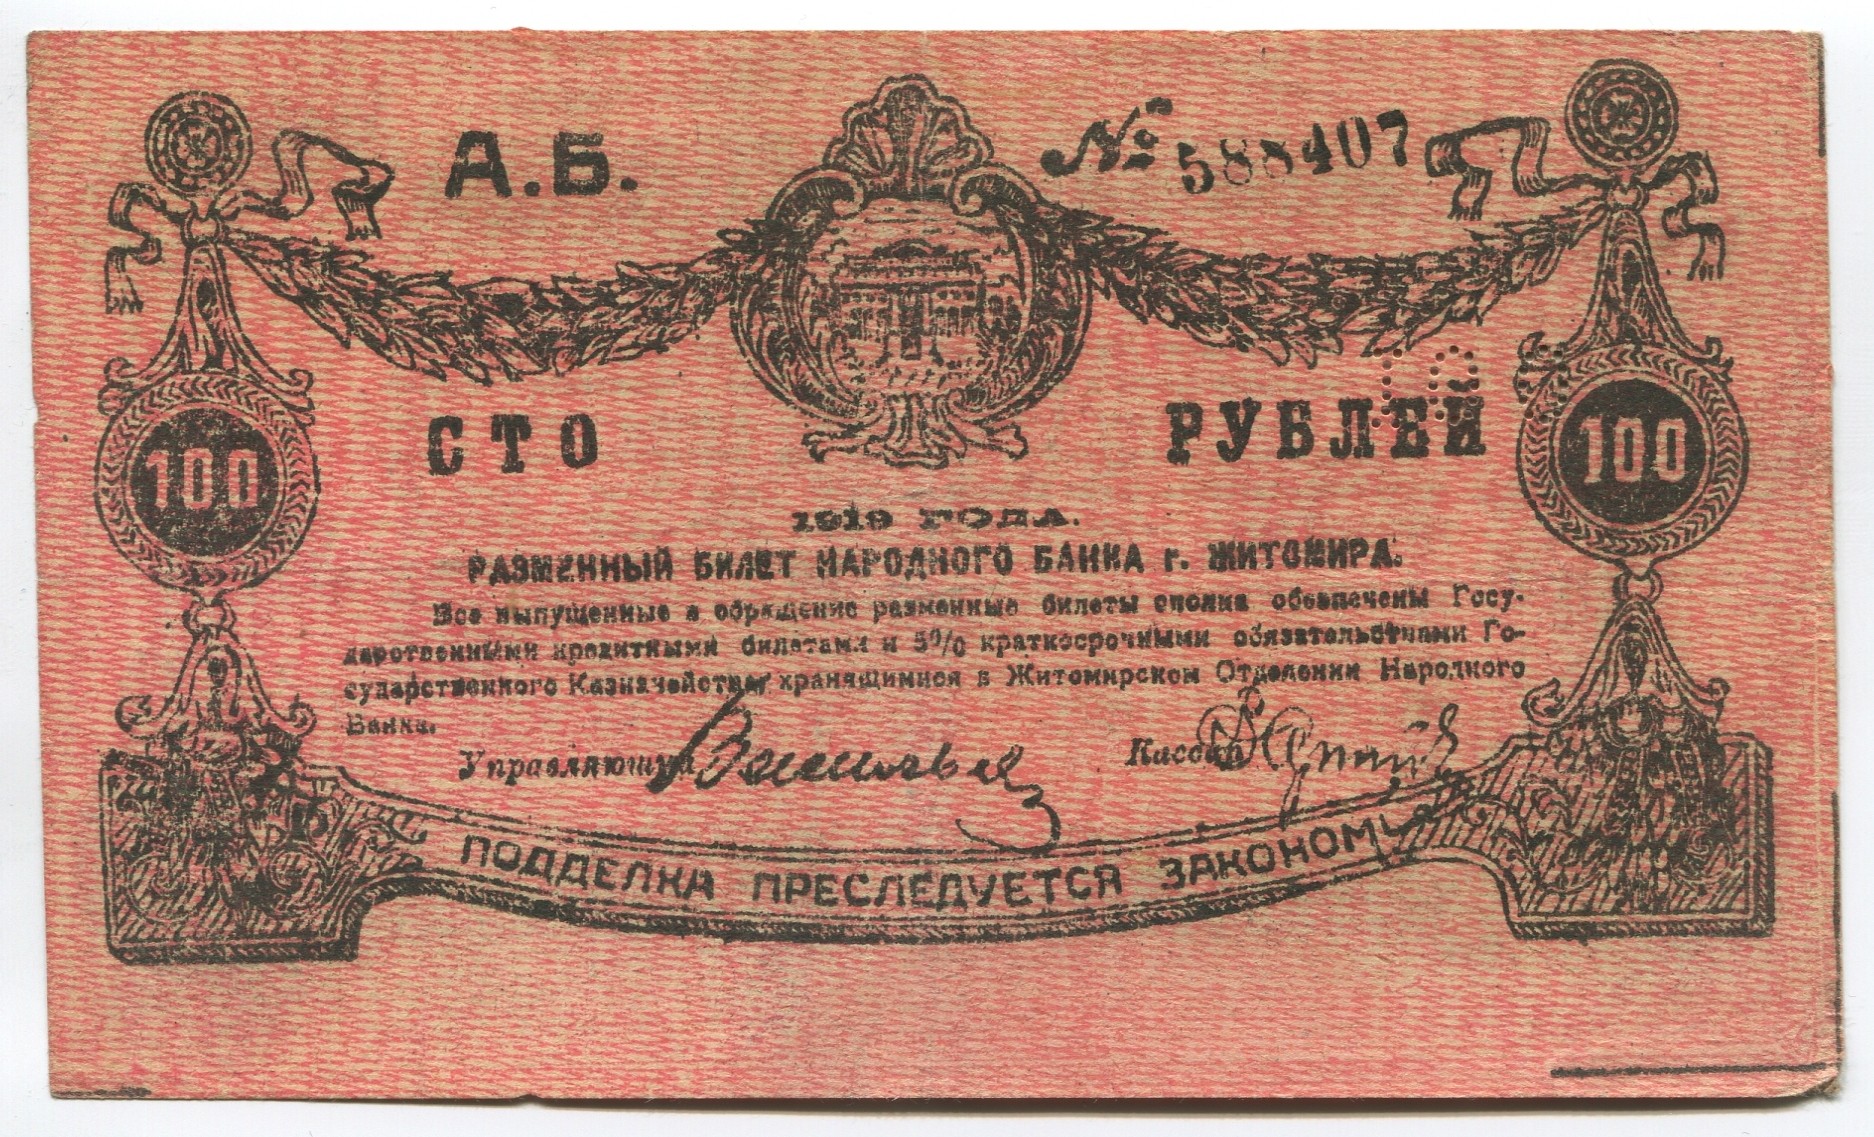 75 рублей 40. 100 Карбованцев 1919 года. 50 Рублей 1919. 50 Рублей 1919 года. Банкнота 50 рублей 1919 года.